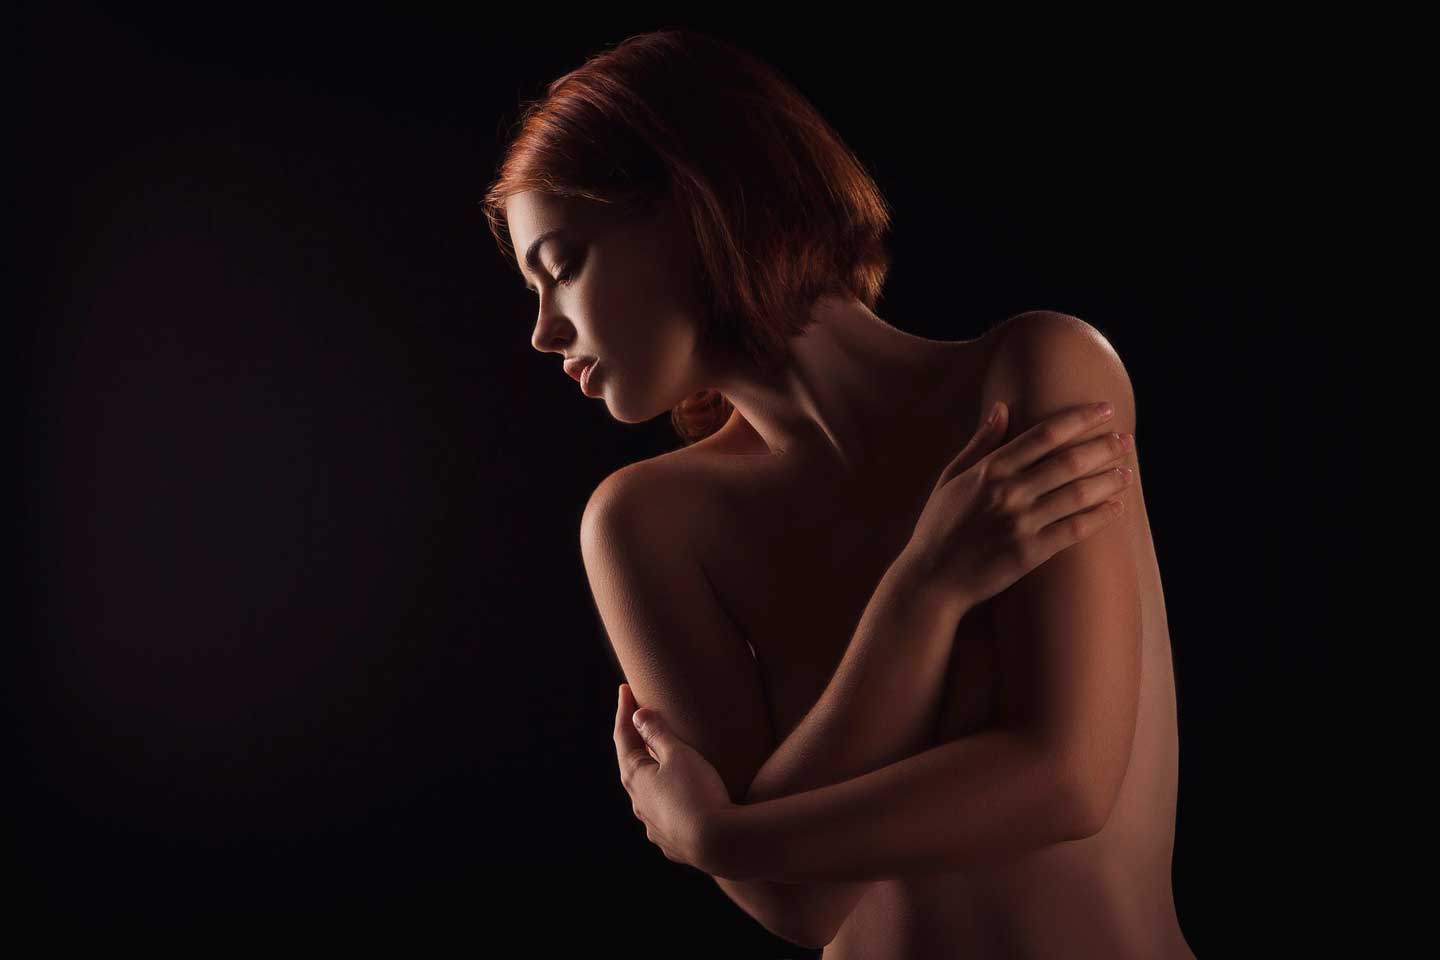 Sensual woman giving sensitive massage